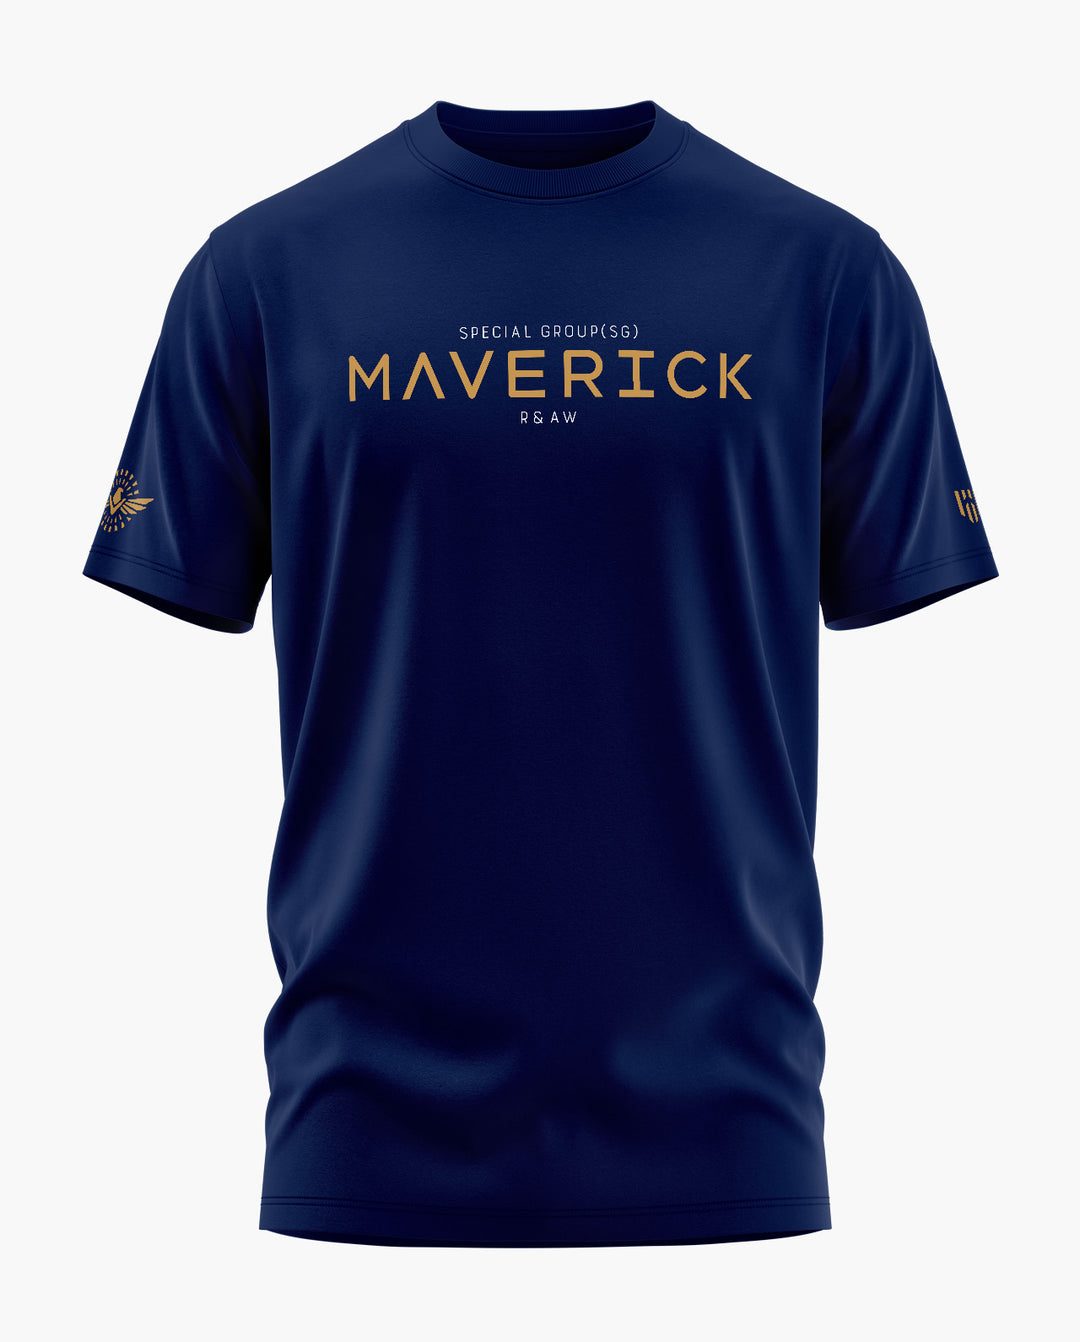 MAVERICK (SG) T-Shirt